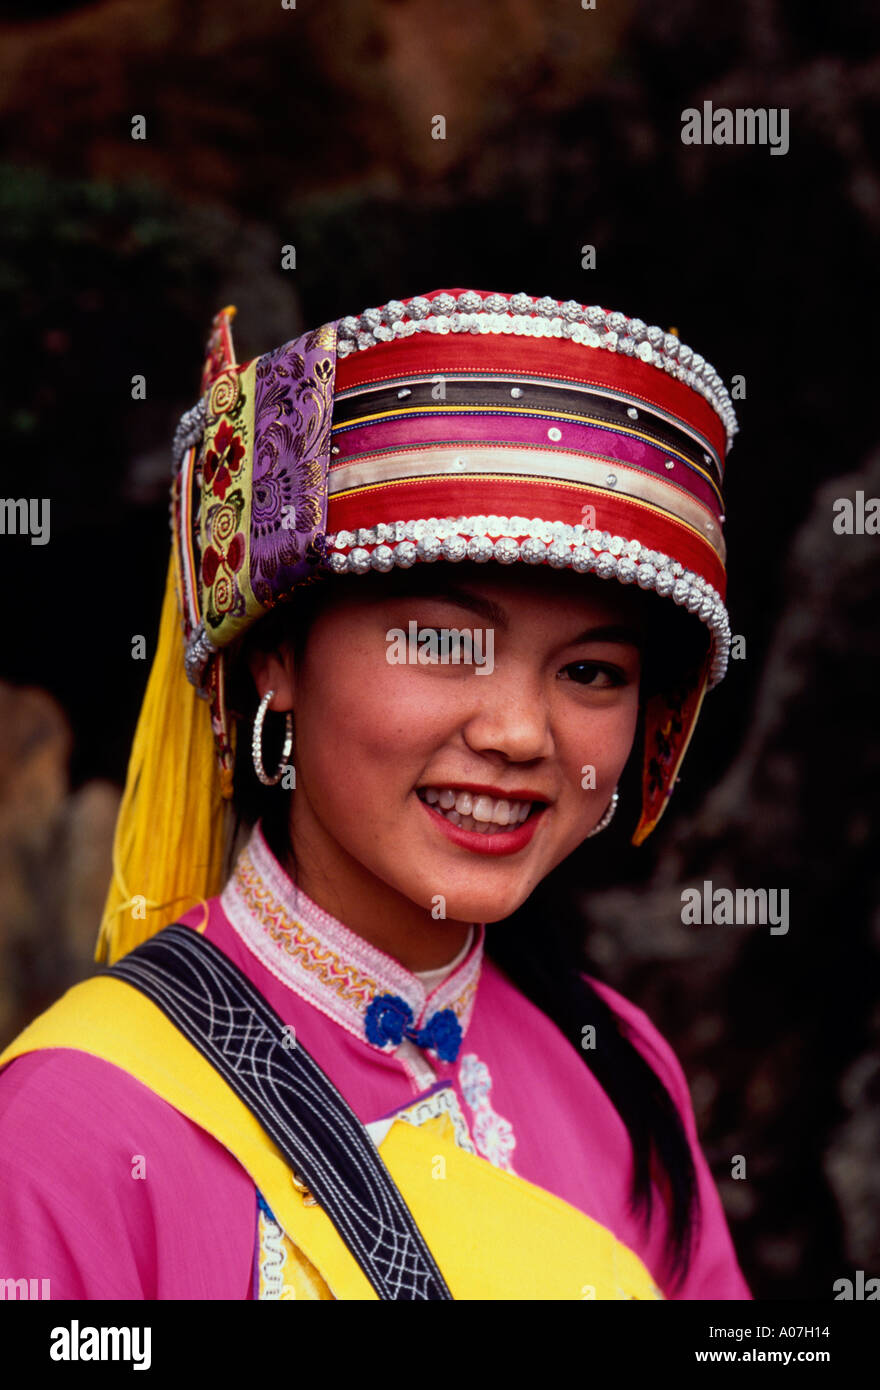 Chinese woman, Sani woman, Sani people, ethnic group, Shilin Stone Forest, Stone Forest, Shilin, Yunnan Province, China, Asia Stock Photo